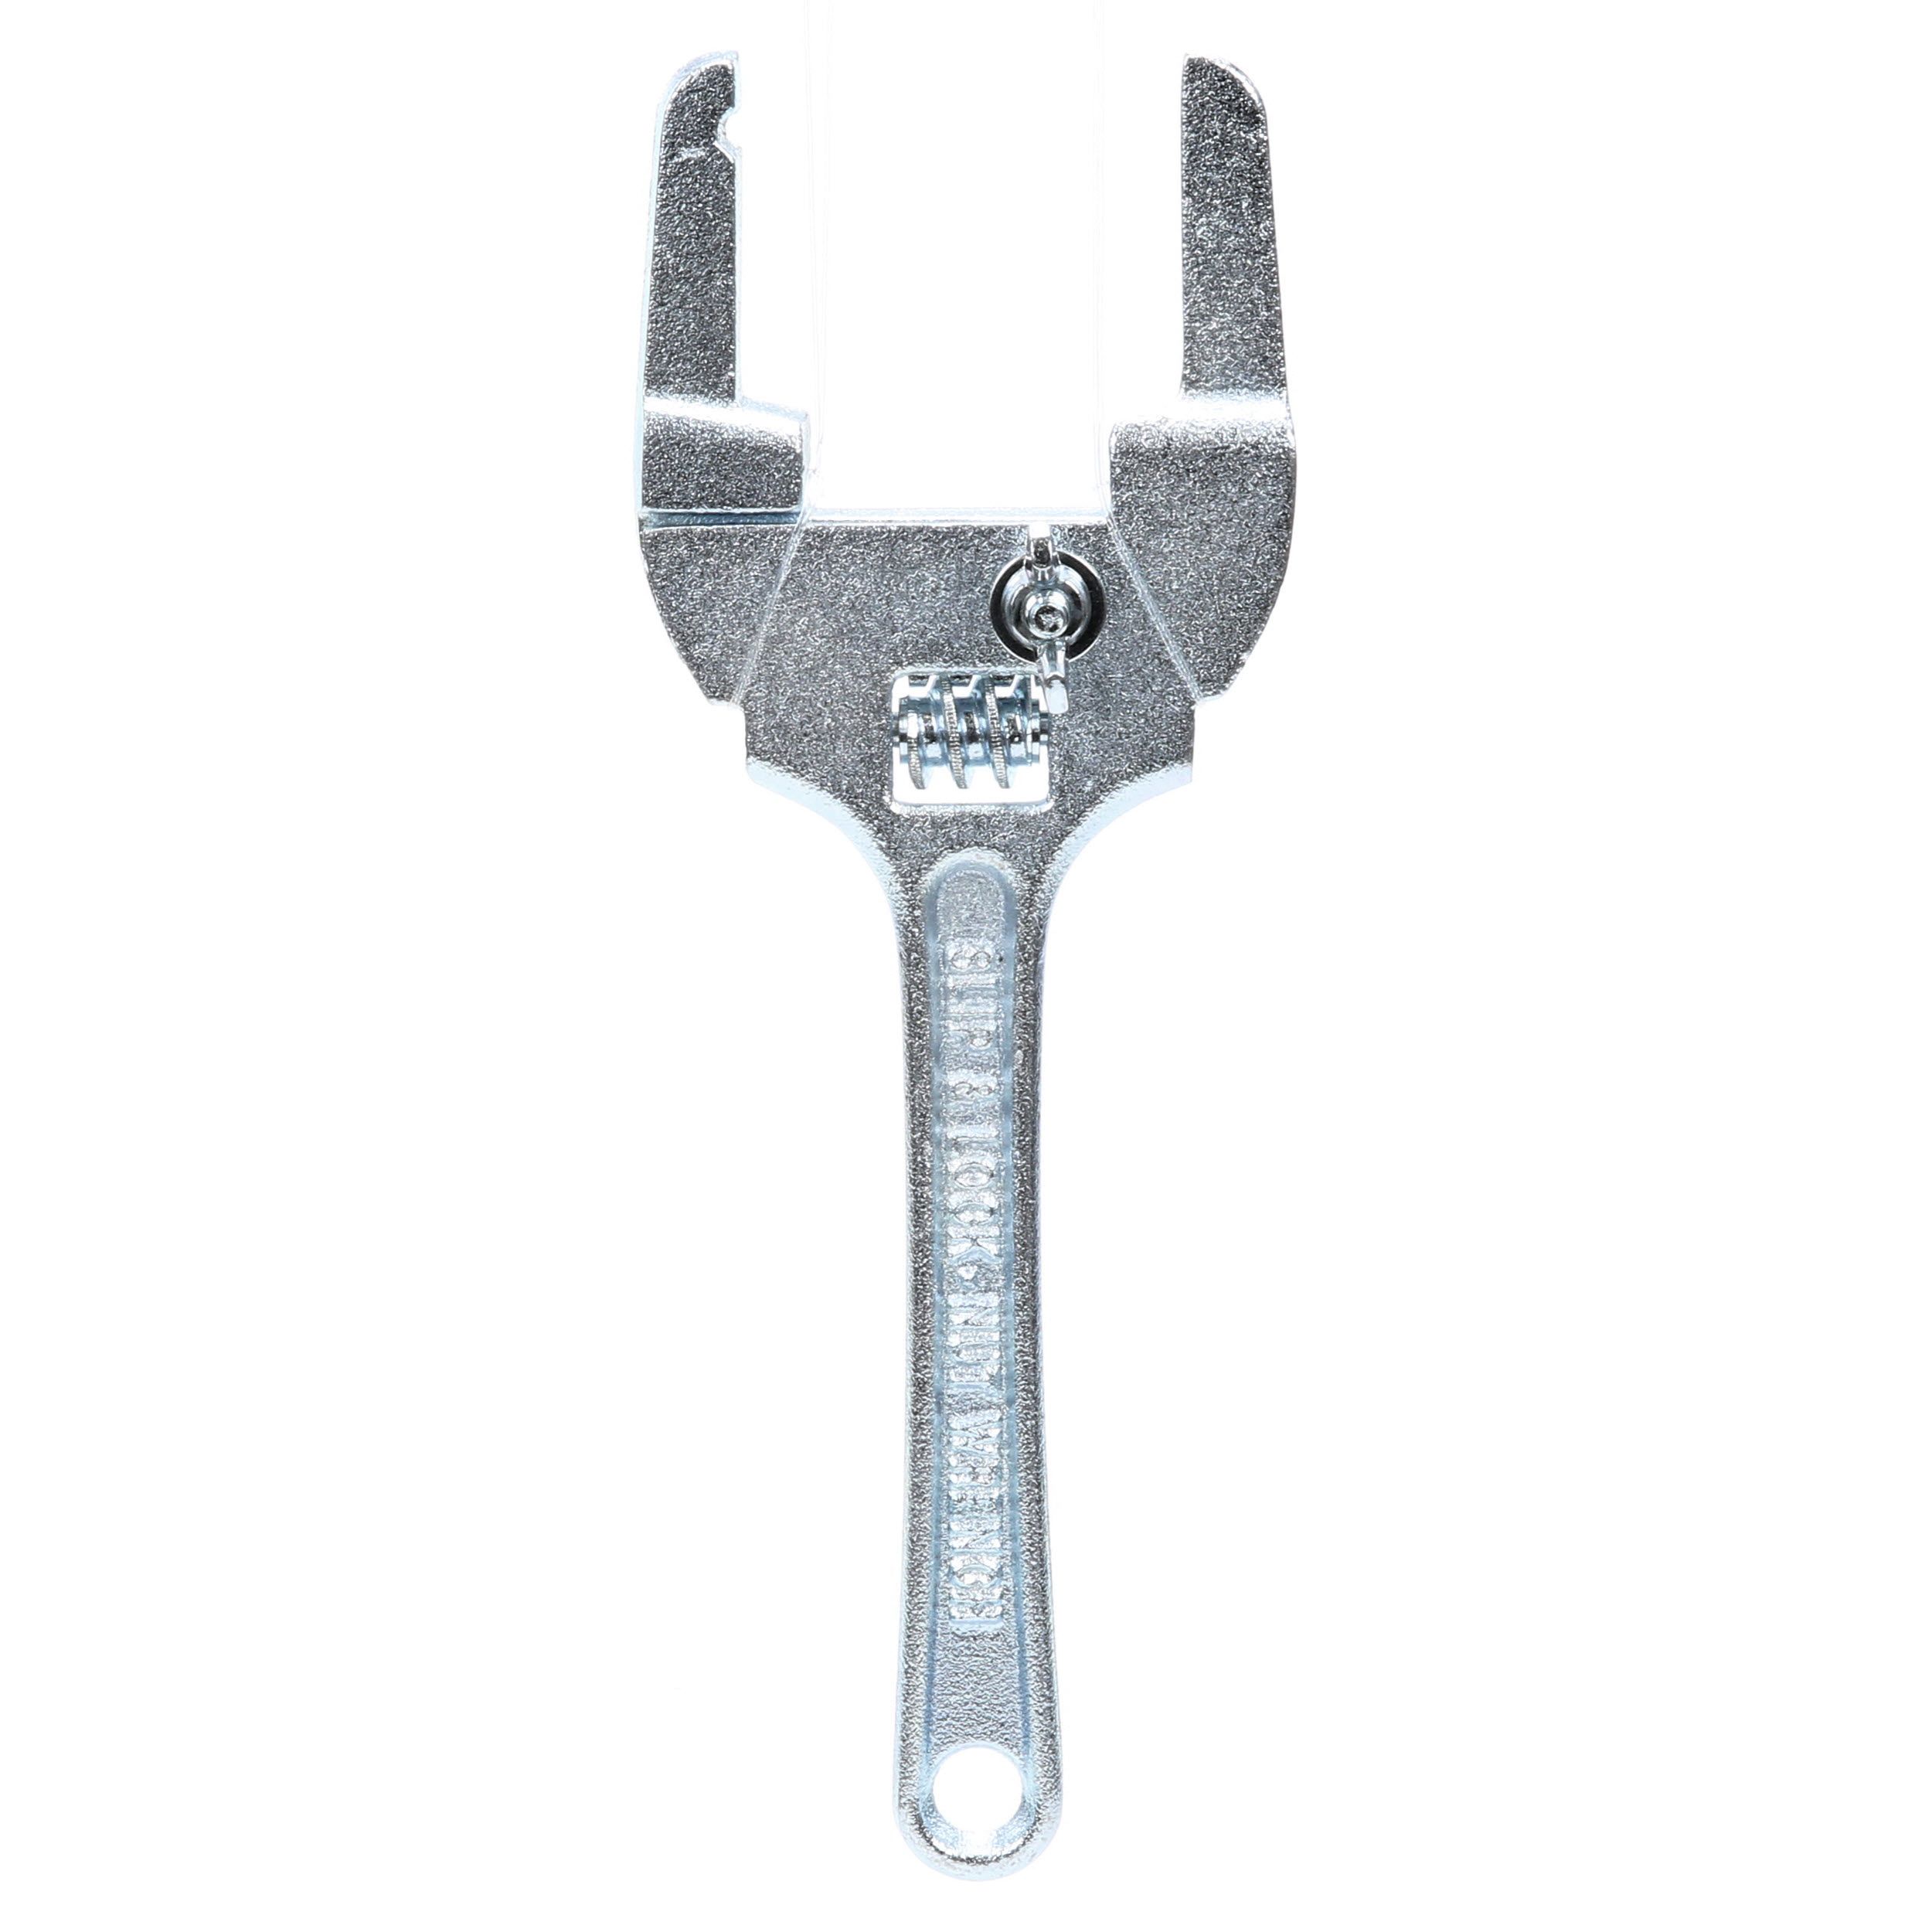 Wrench Slip Nut Adjustable,No T1523L Mintcraft 